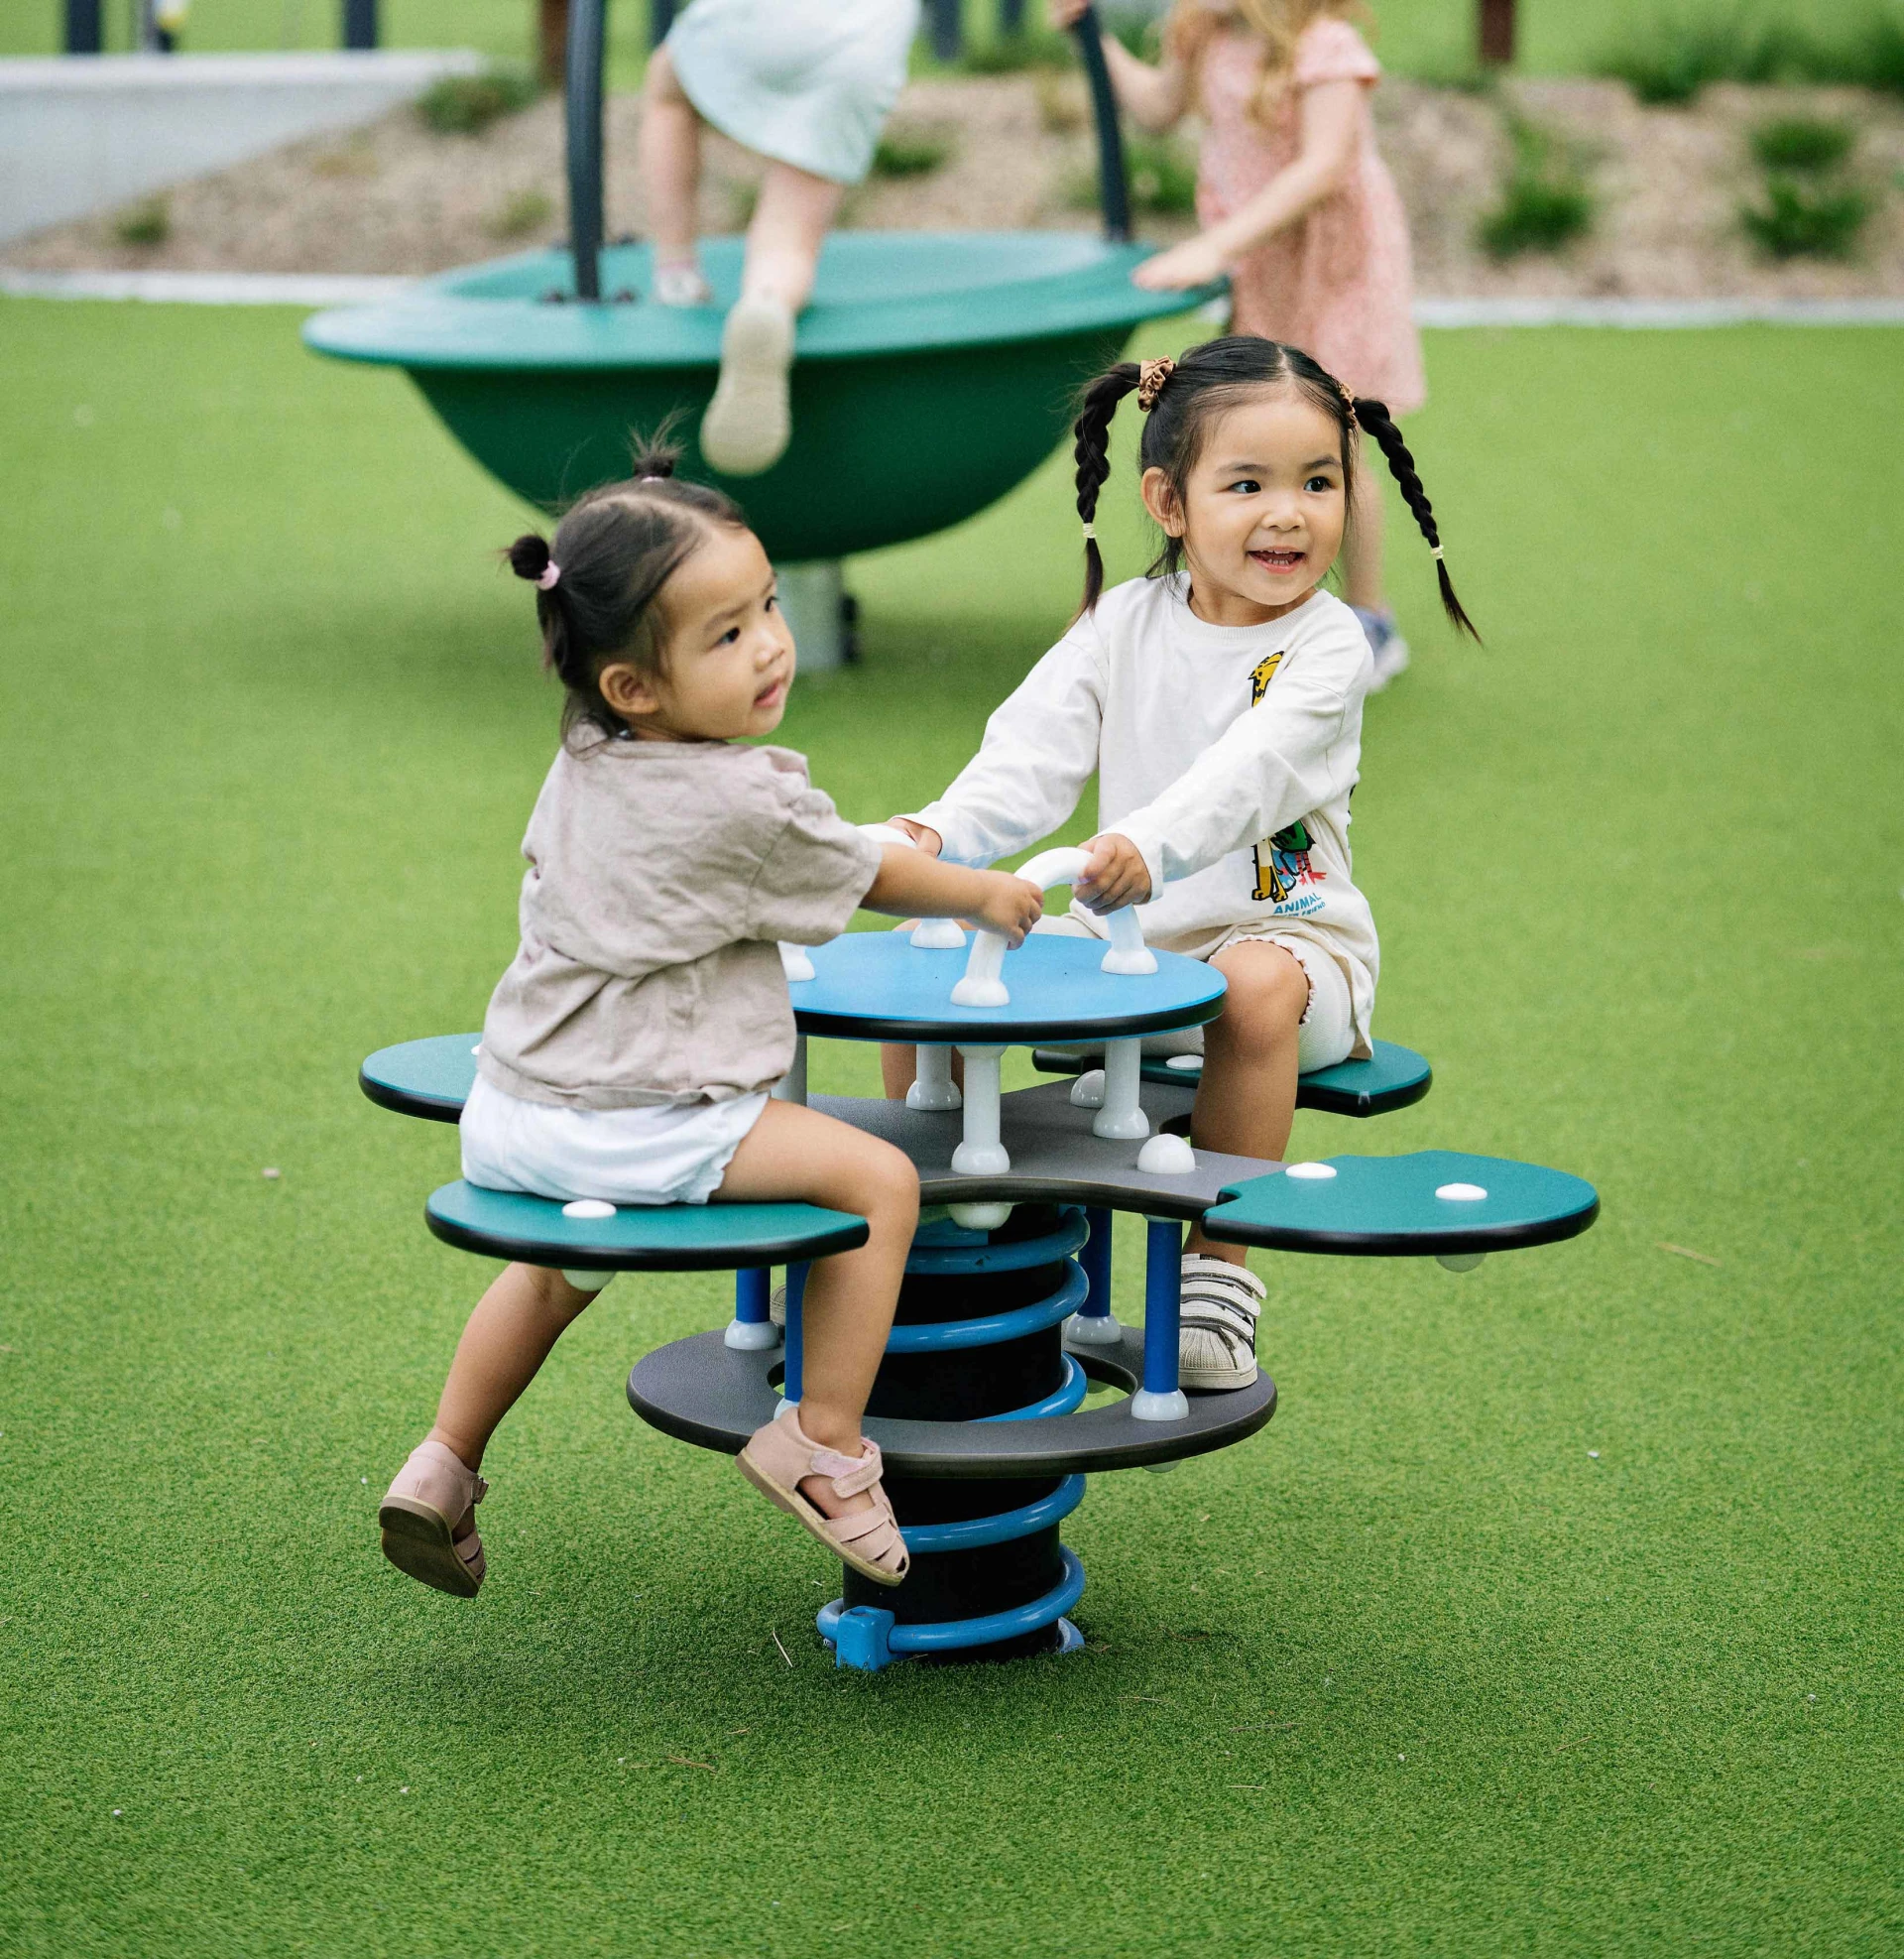 Toddlers playing on KOMPAN playground equipment